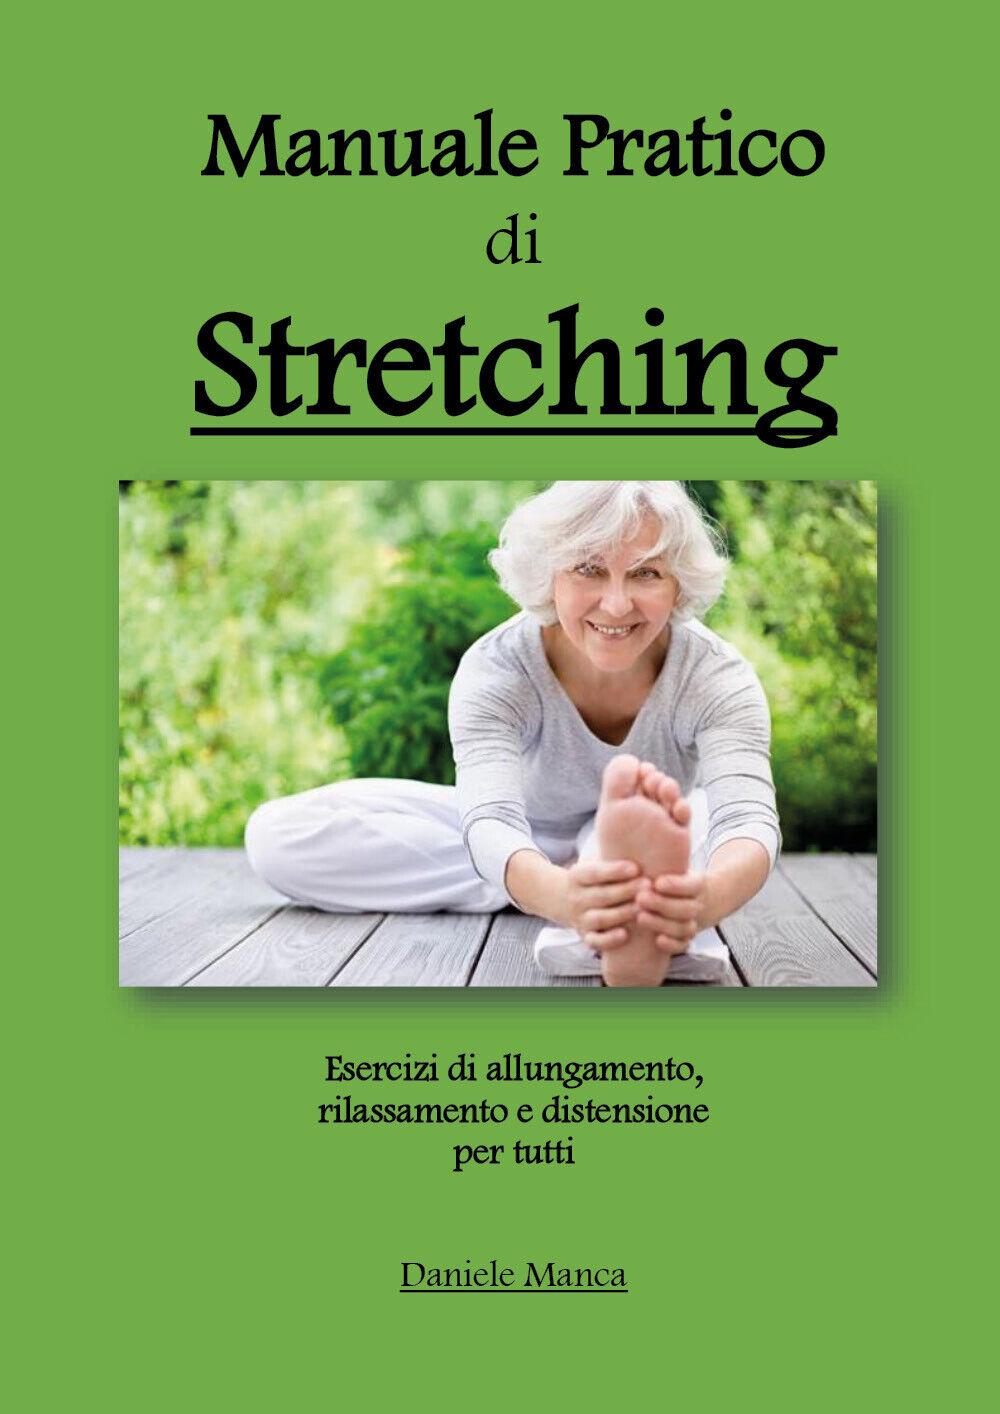 Manuale pratico di Stretching di Daniele Manca,  2020,  Youcanprint libro usato